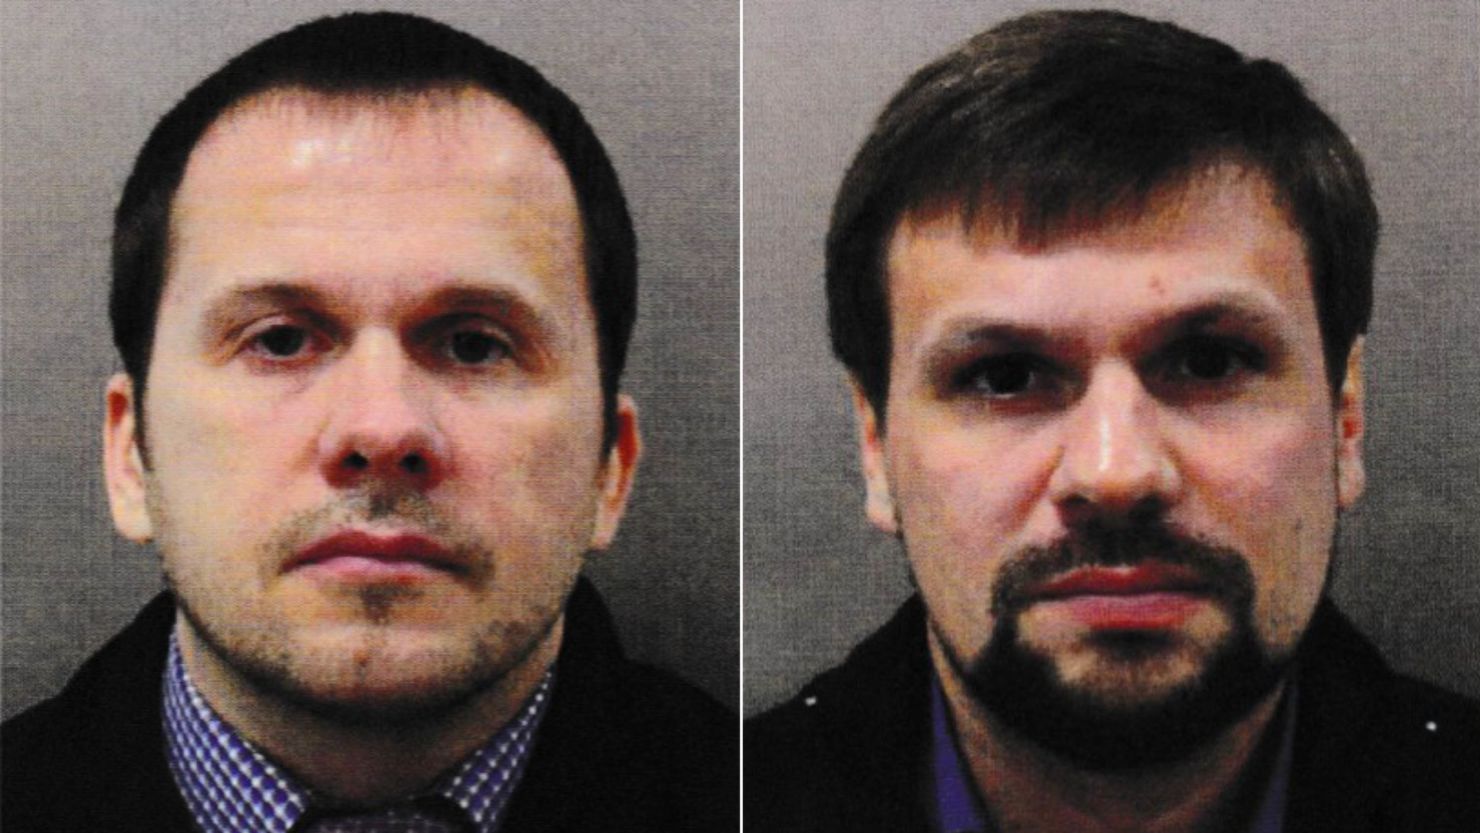 Salisbury attack suspects Alexander Petrov, left, and Ruslan Boshirov, right.